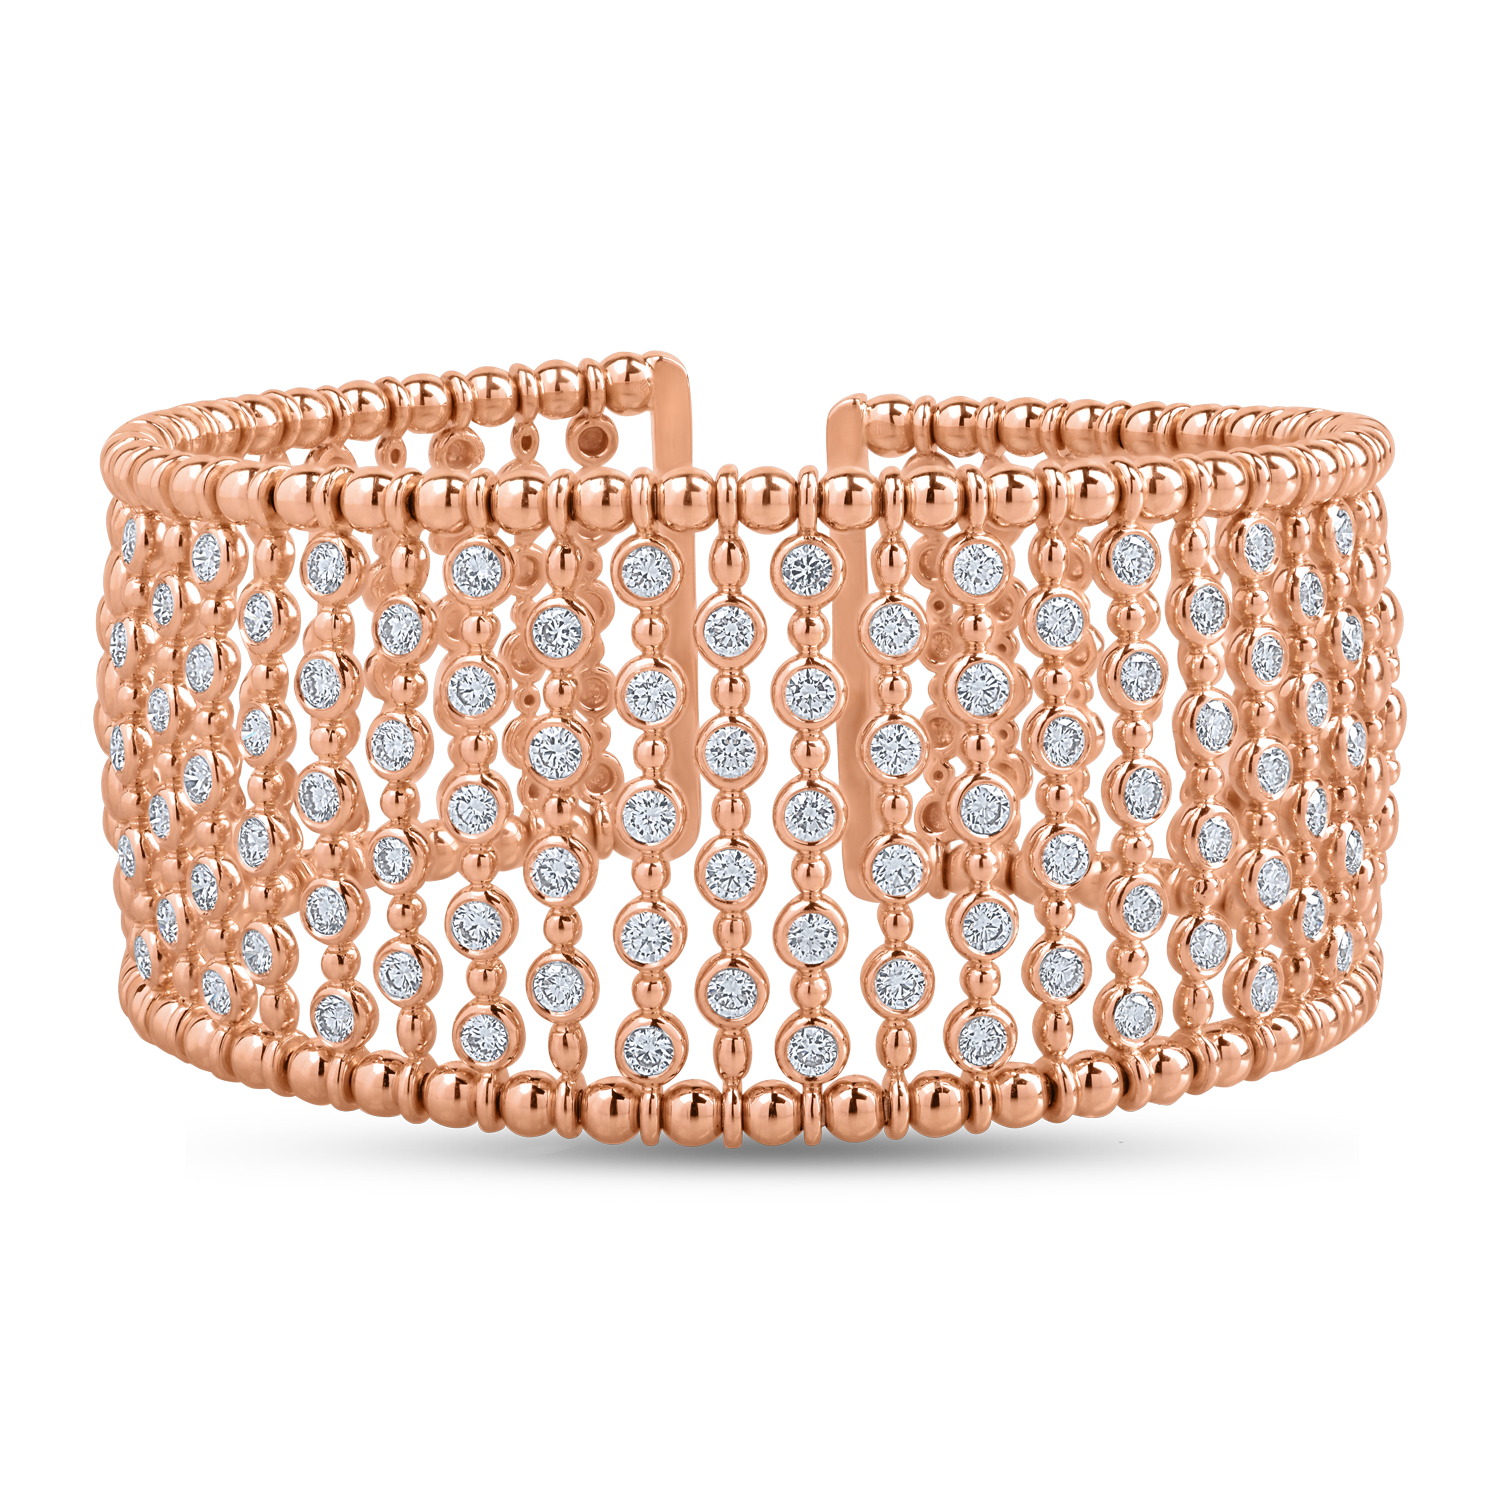 Rose gold bracelet with 4.02ct diamonds